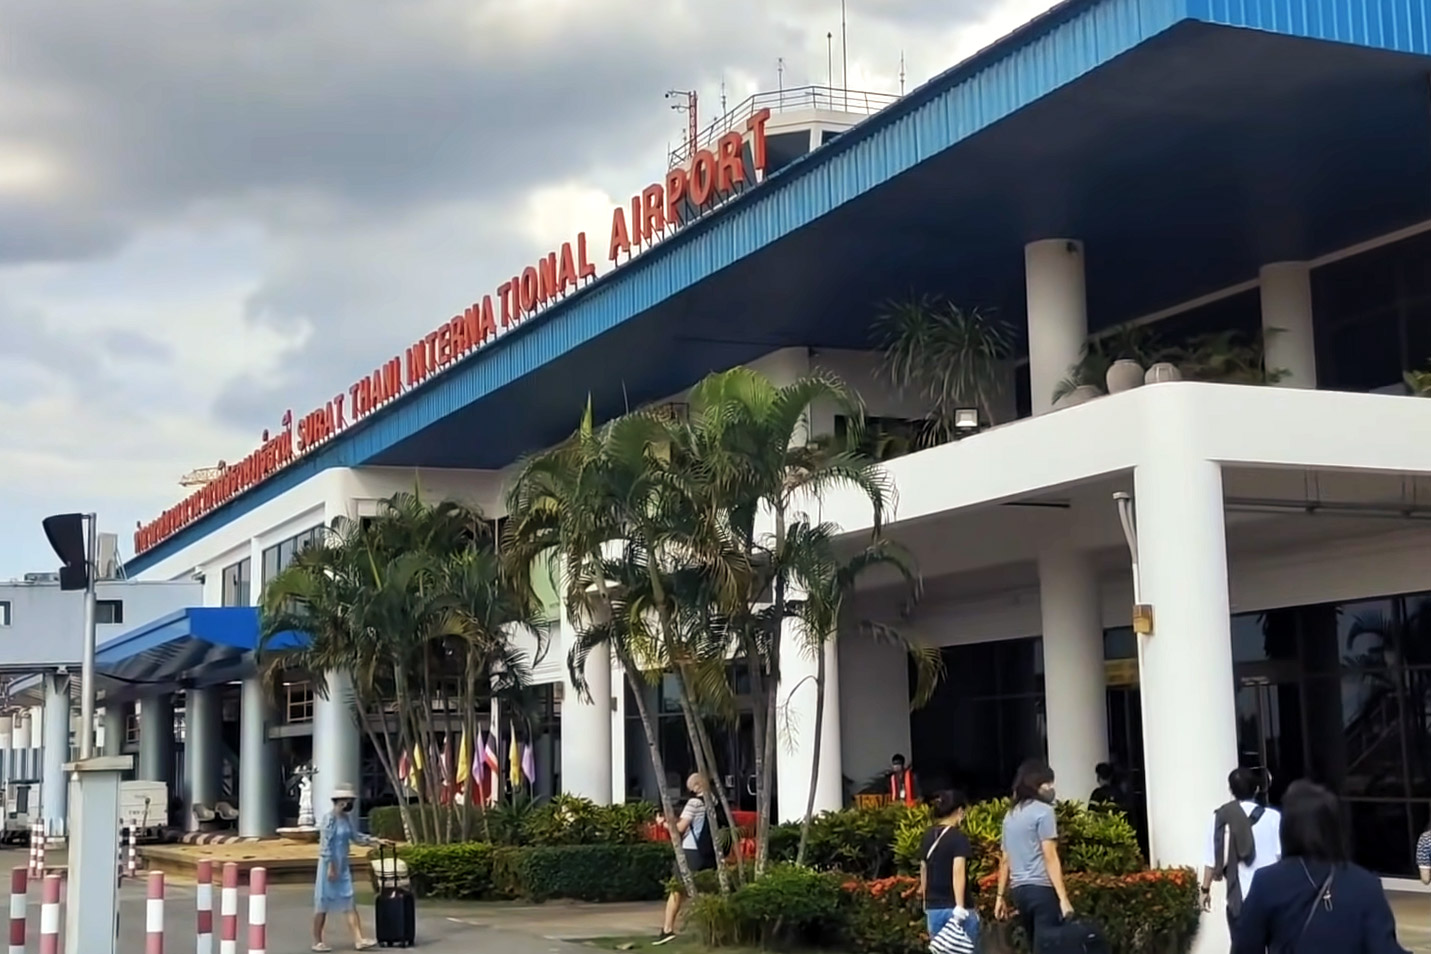 Surat Thani airport